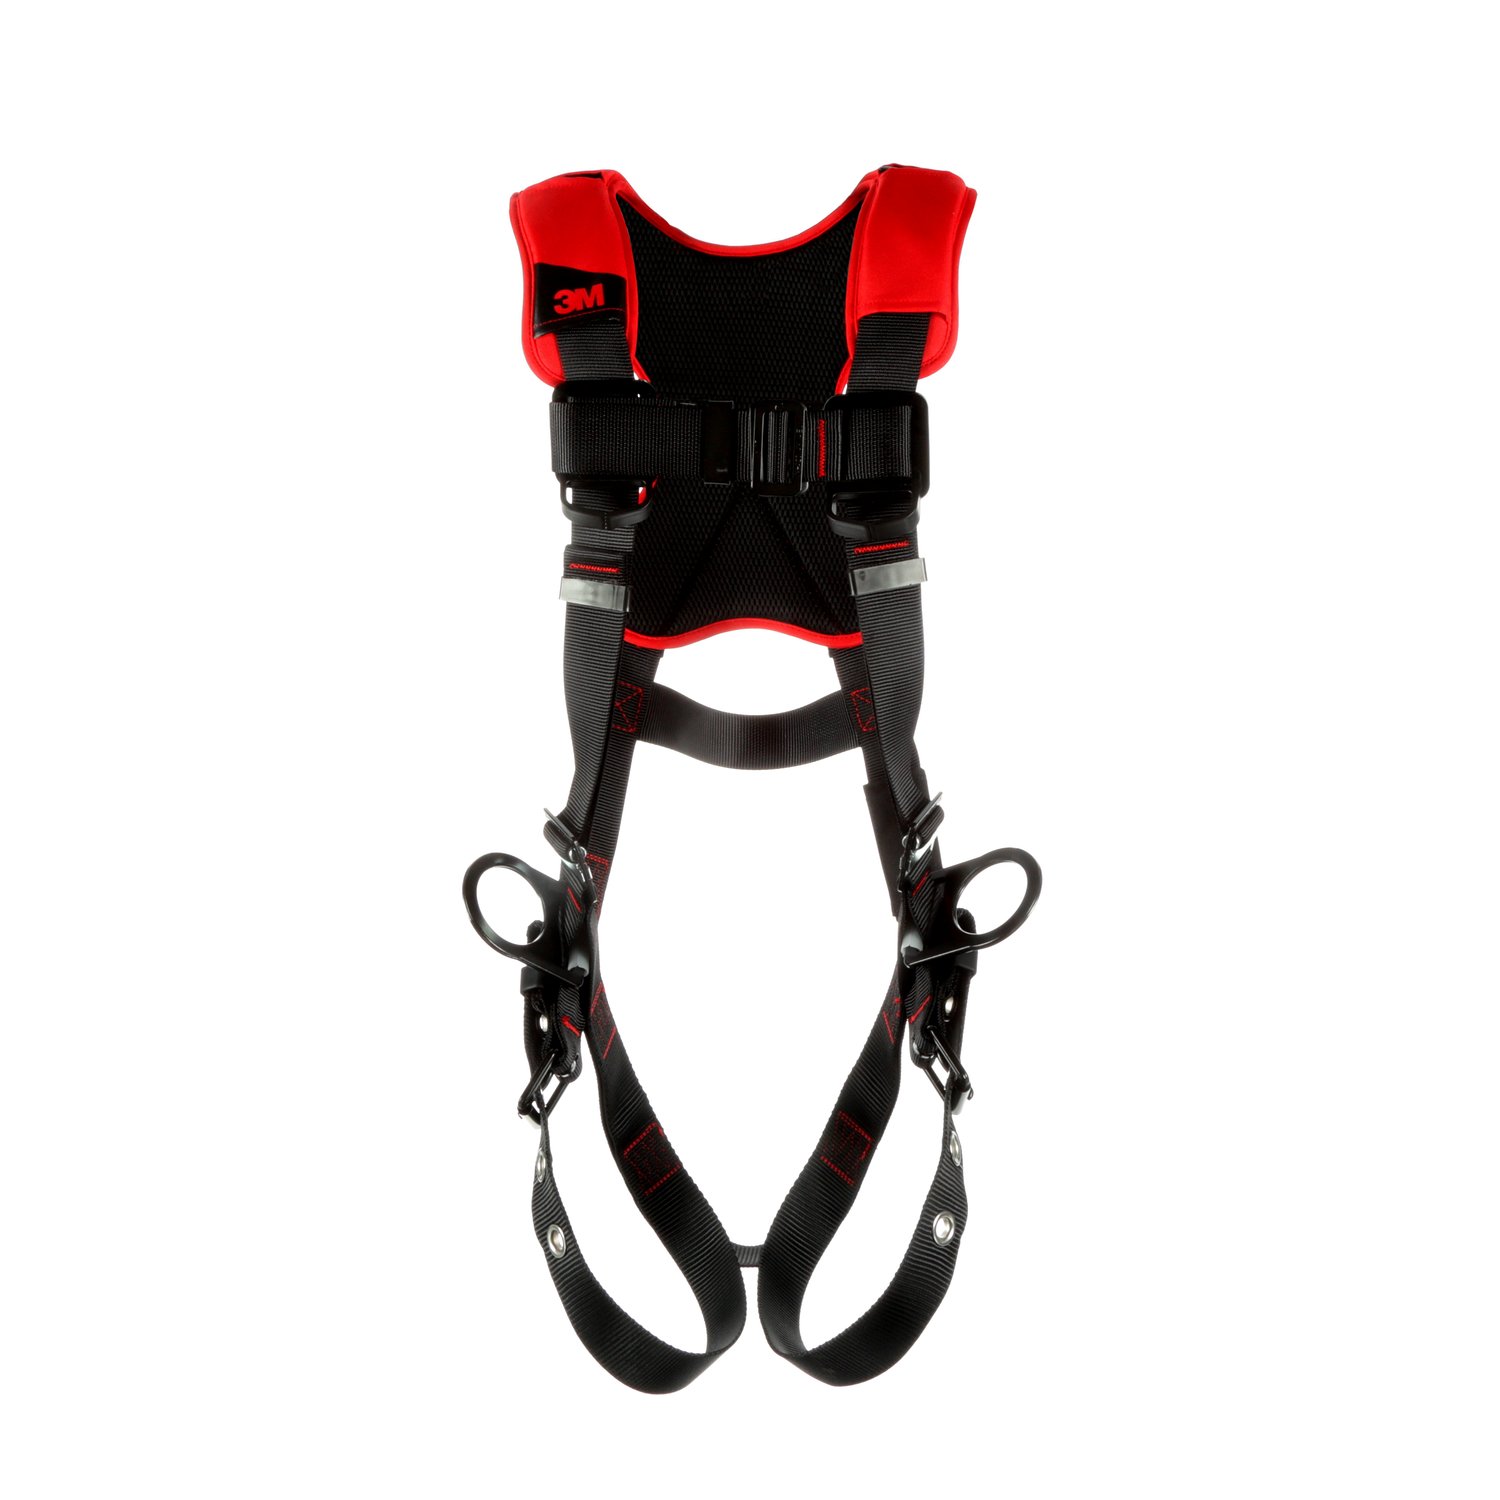 7012816682 - 3M Protecta P200 Comfort Vest Positioning Safety Harness 1161414, Medium/Large